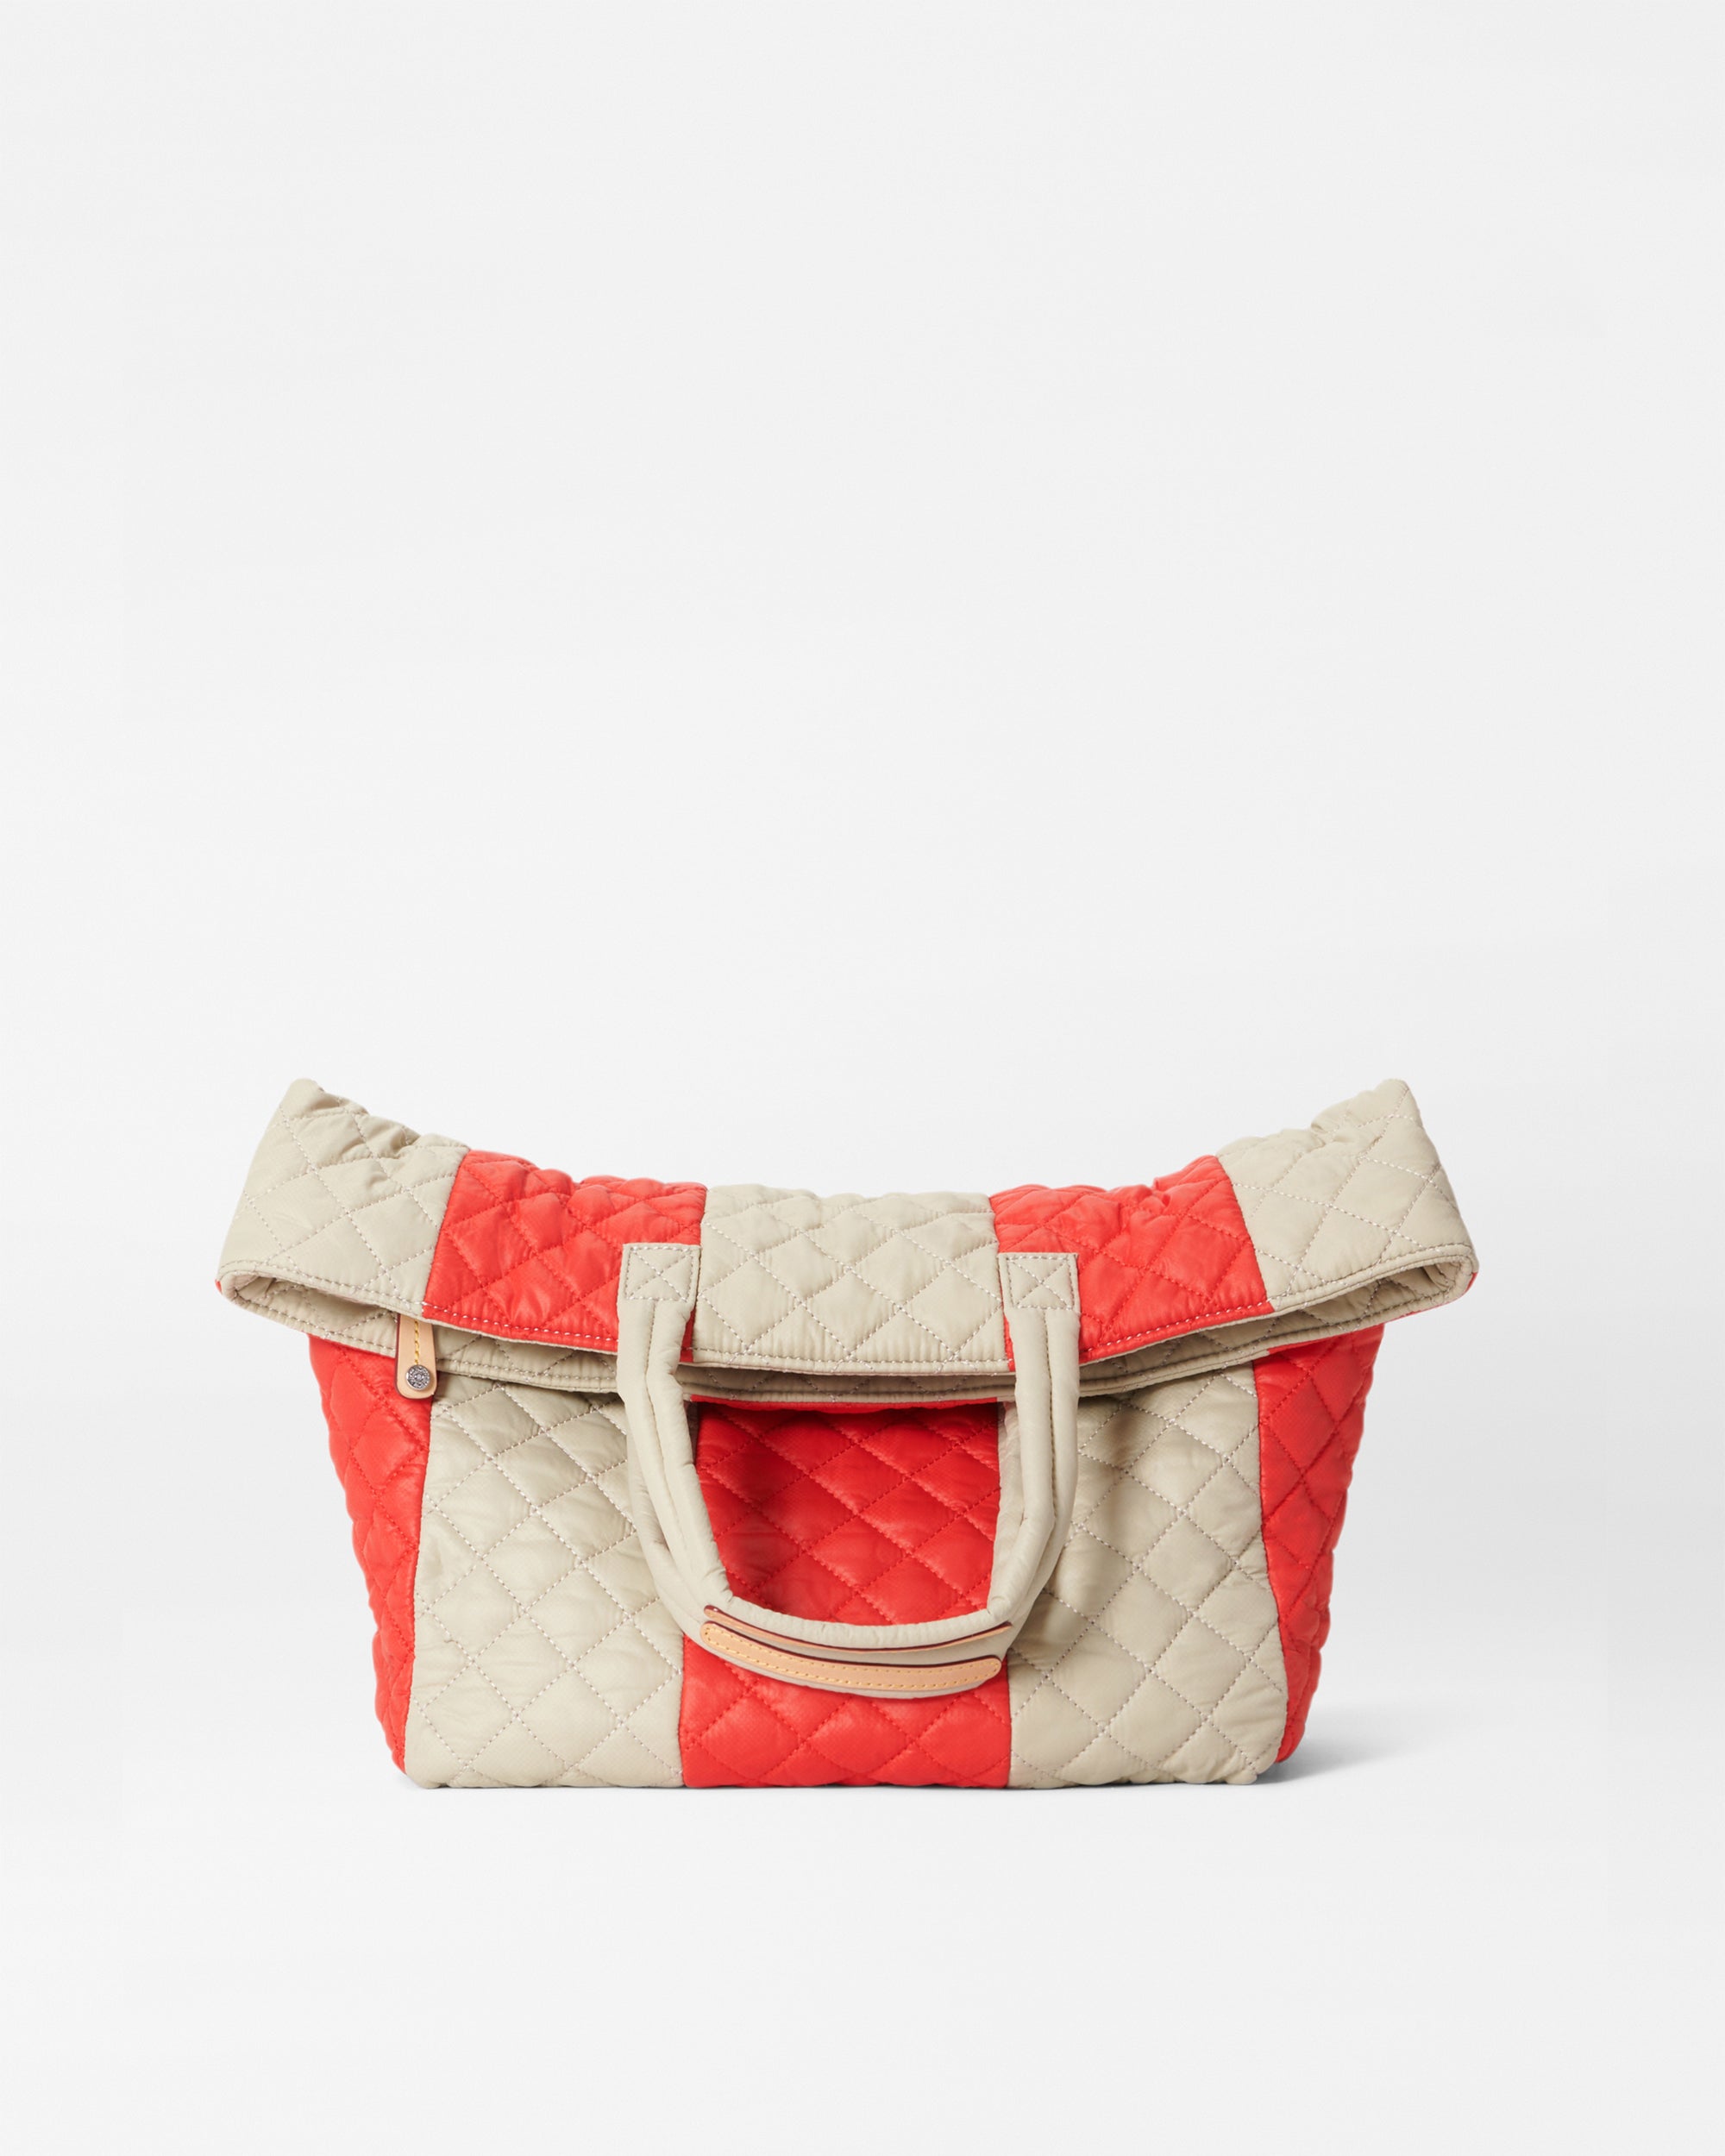 chanel quilted nylon tote handbag